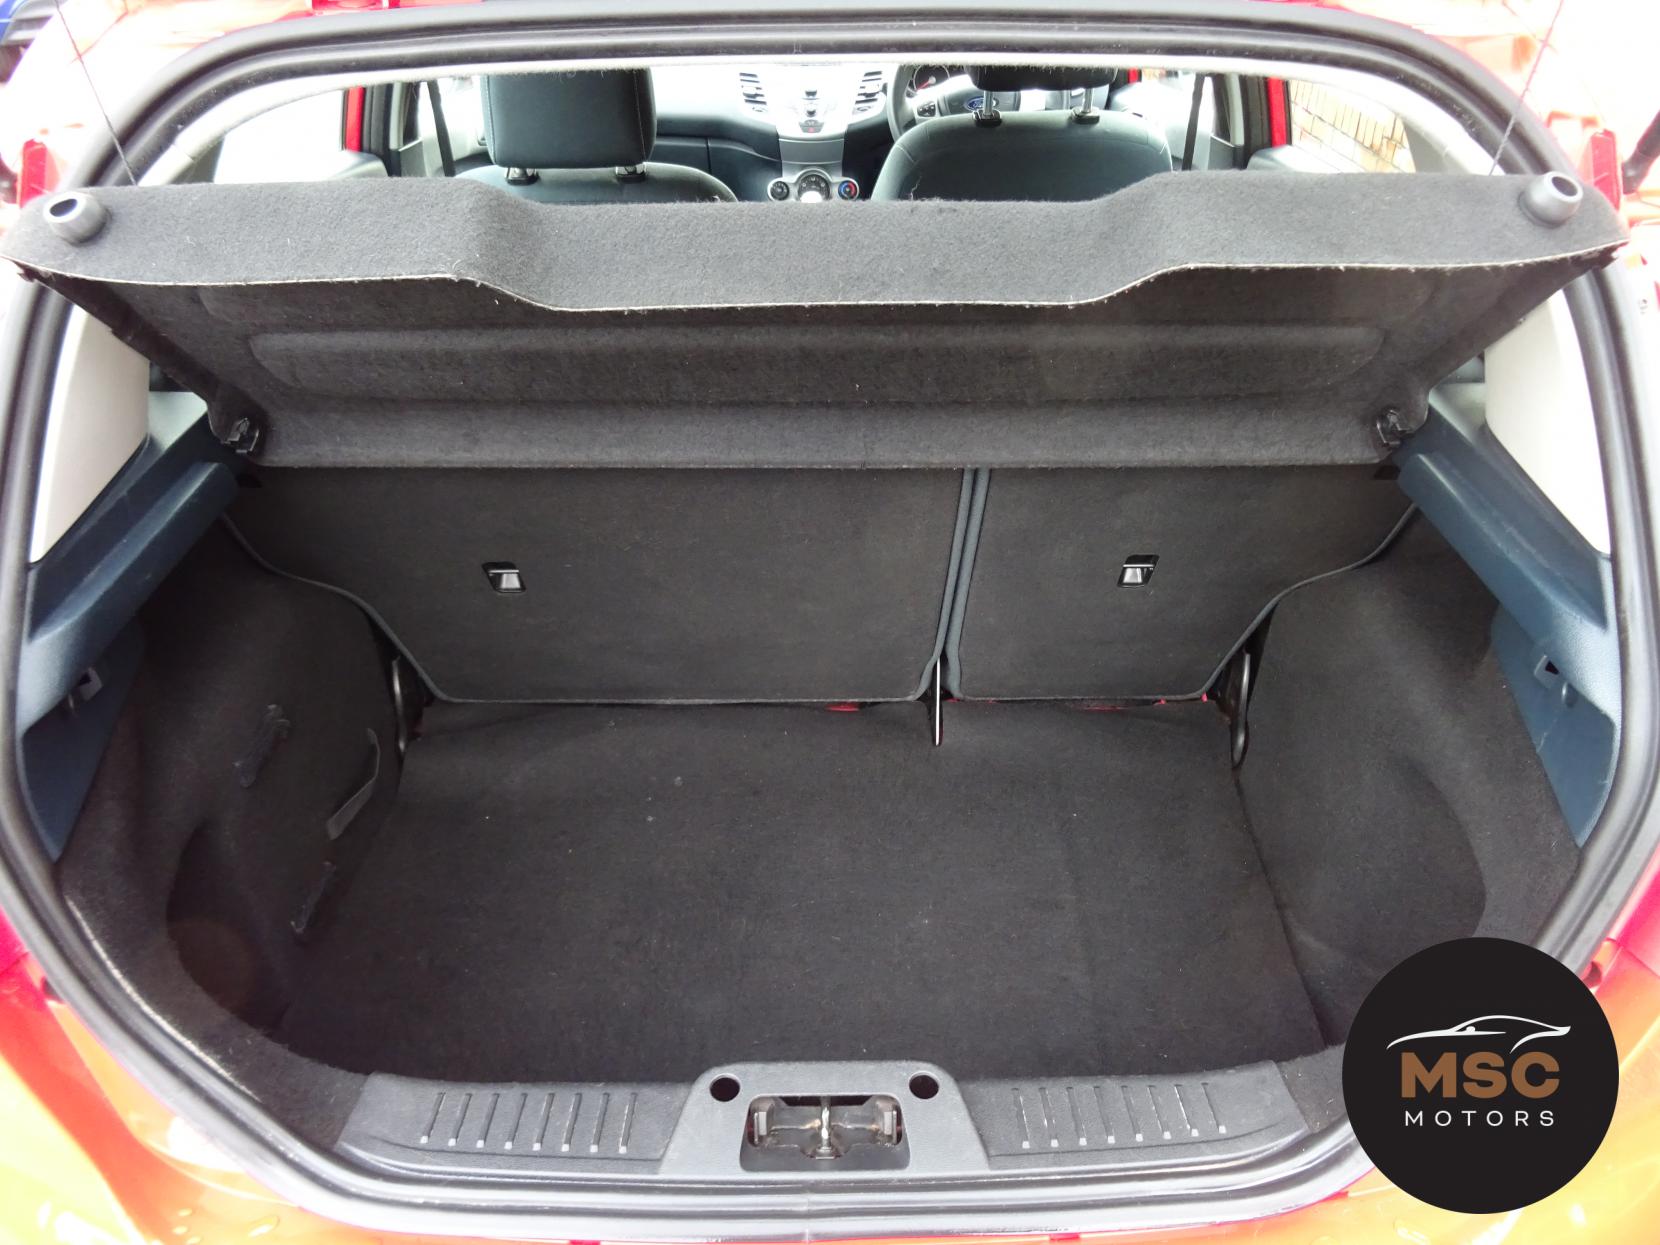 Ford Fiesta 1.25 Edge Hatchback 5dr Petrol Manual (127 g/km, 59 bhp)